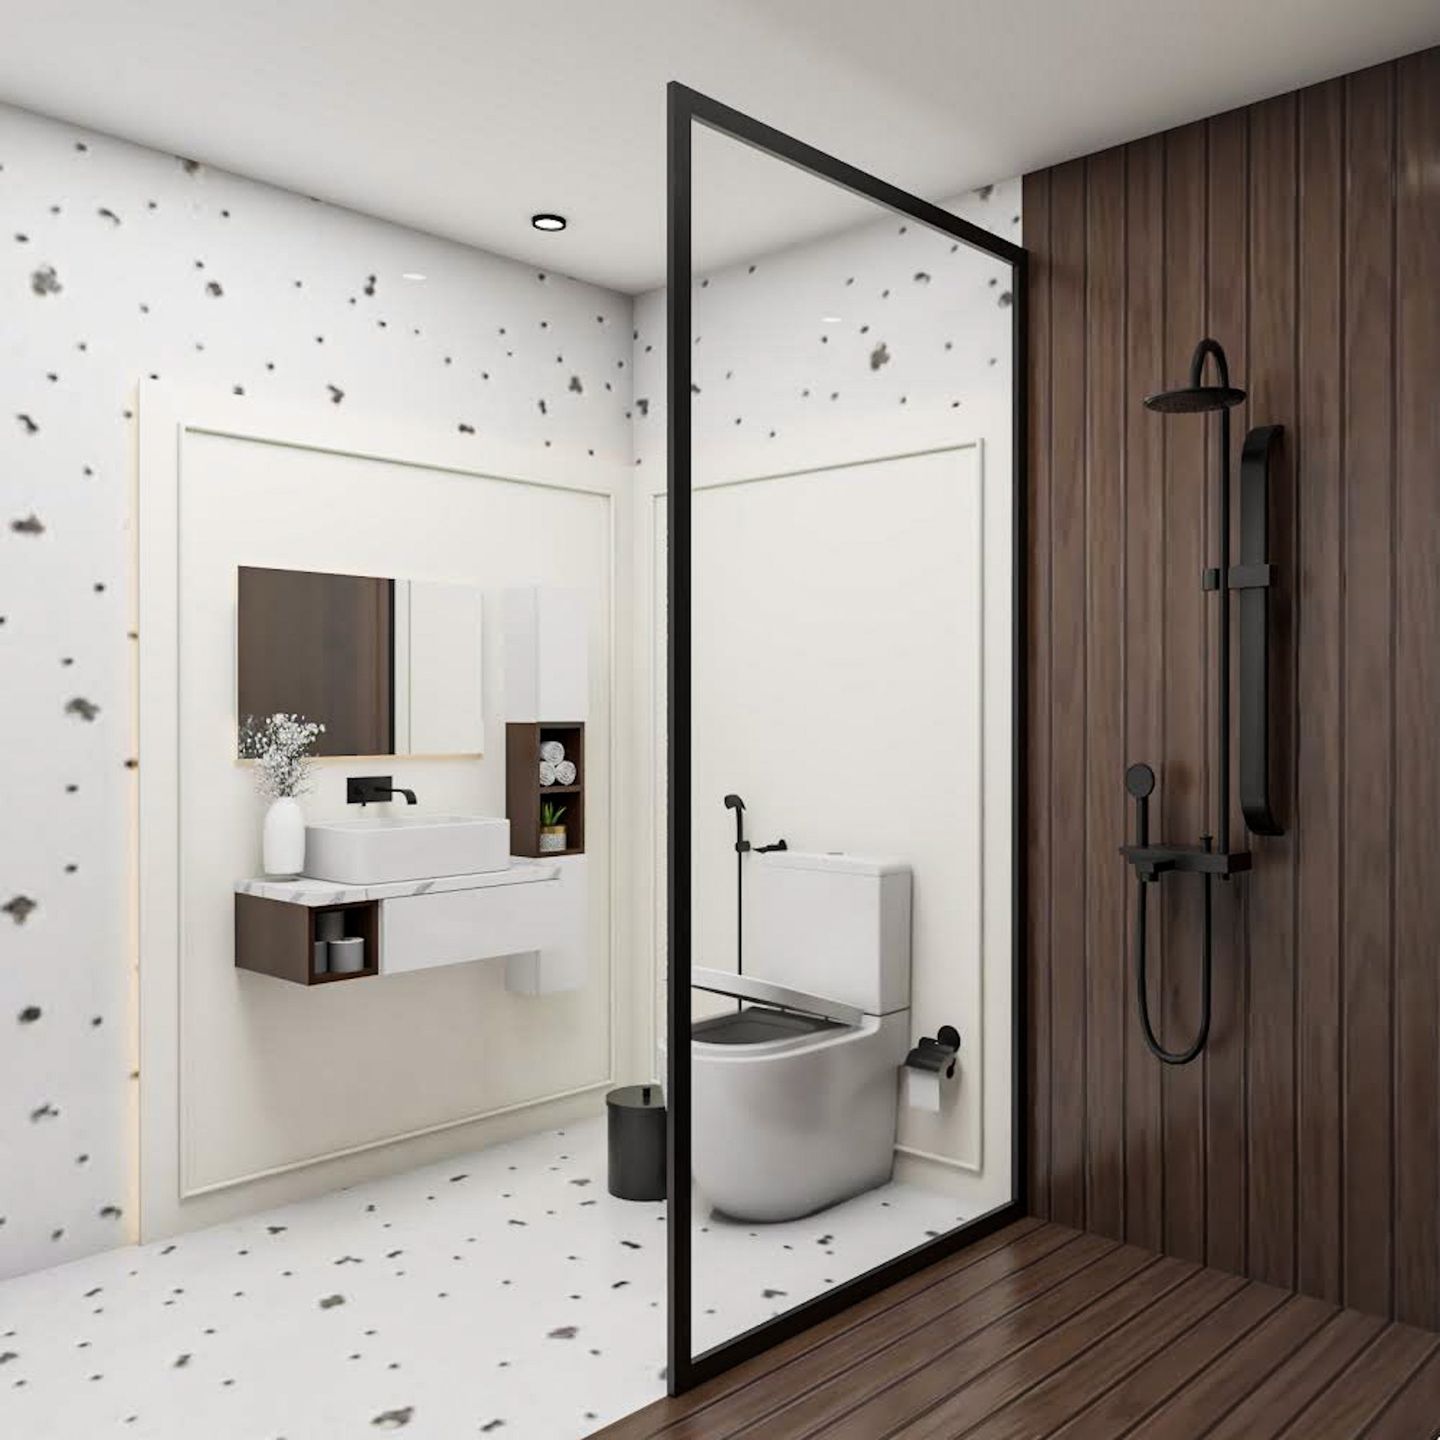 Contemporary Bathroom Design With Granite Elements And Round Mirror - Livspace